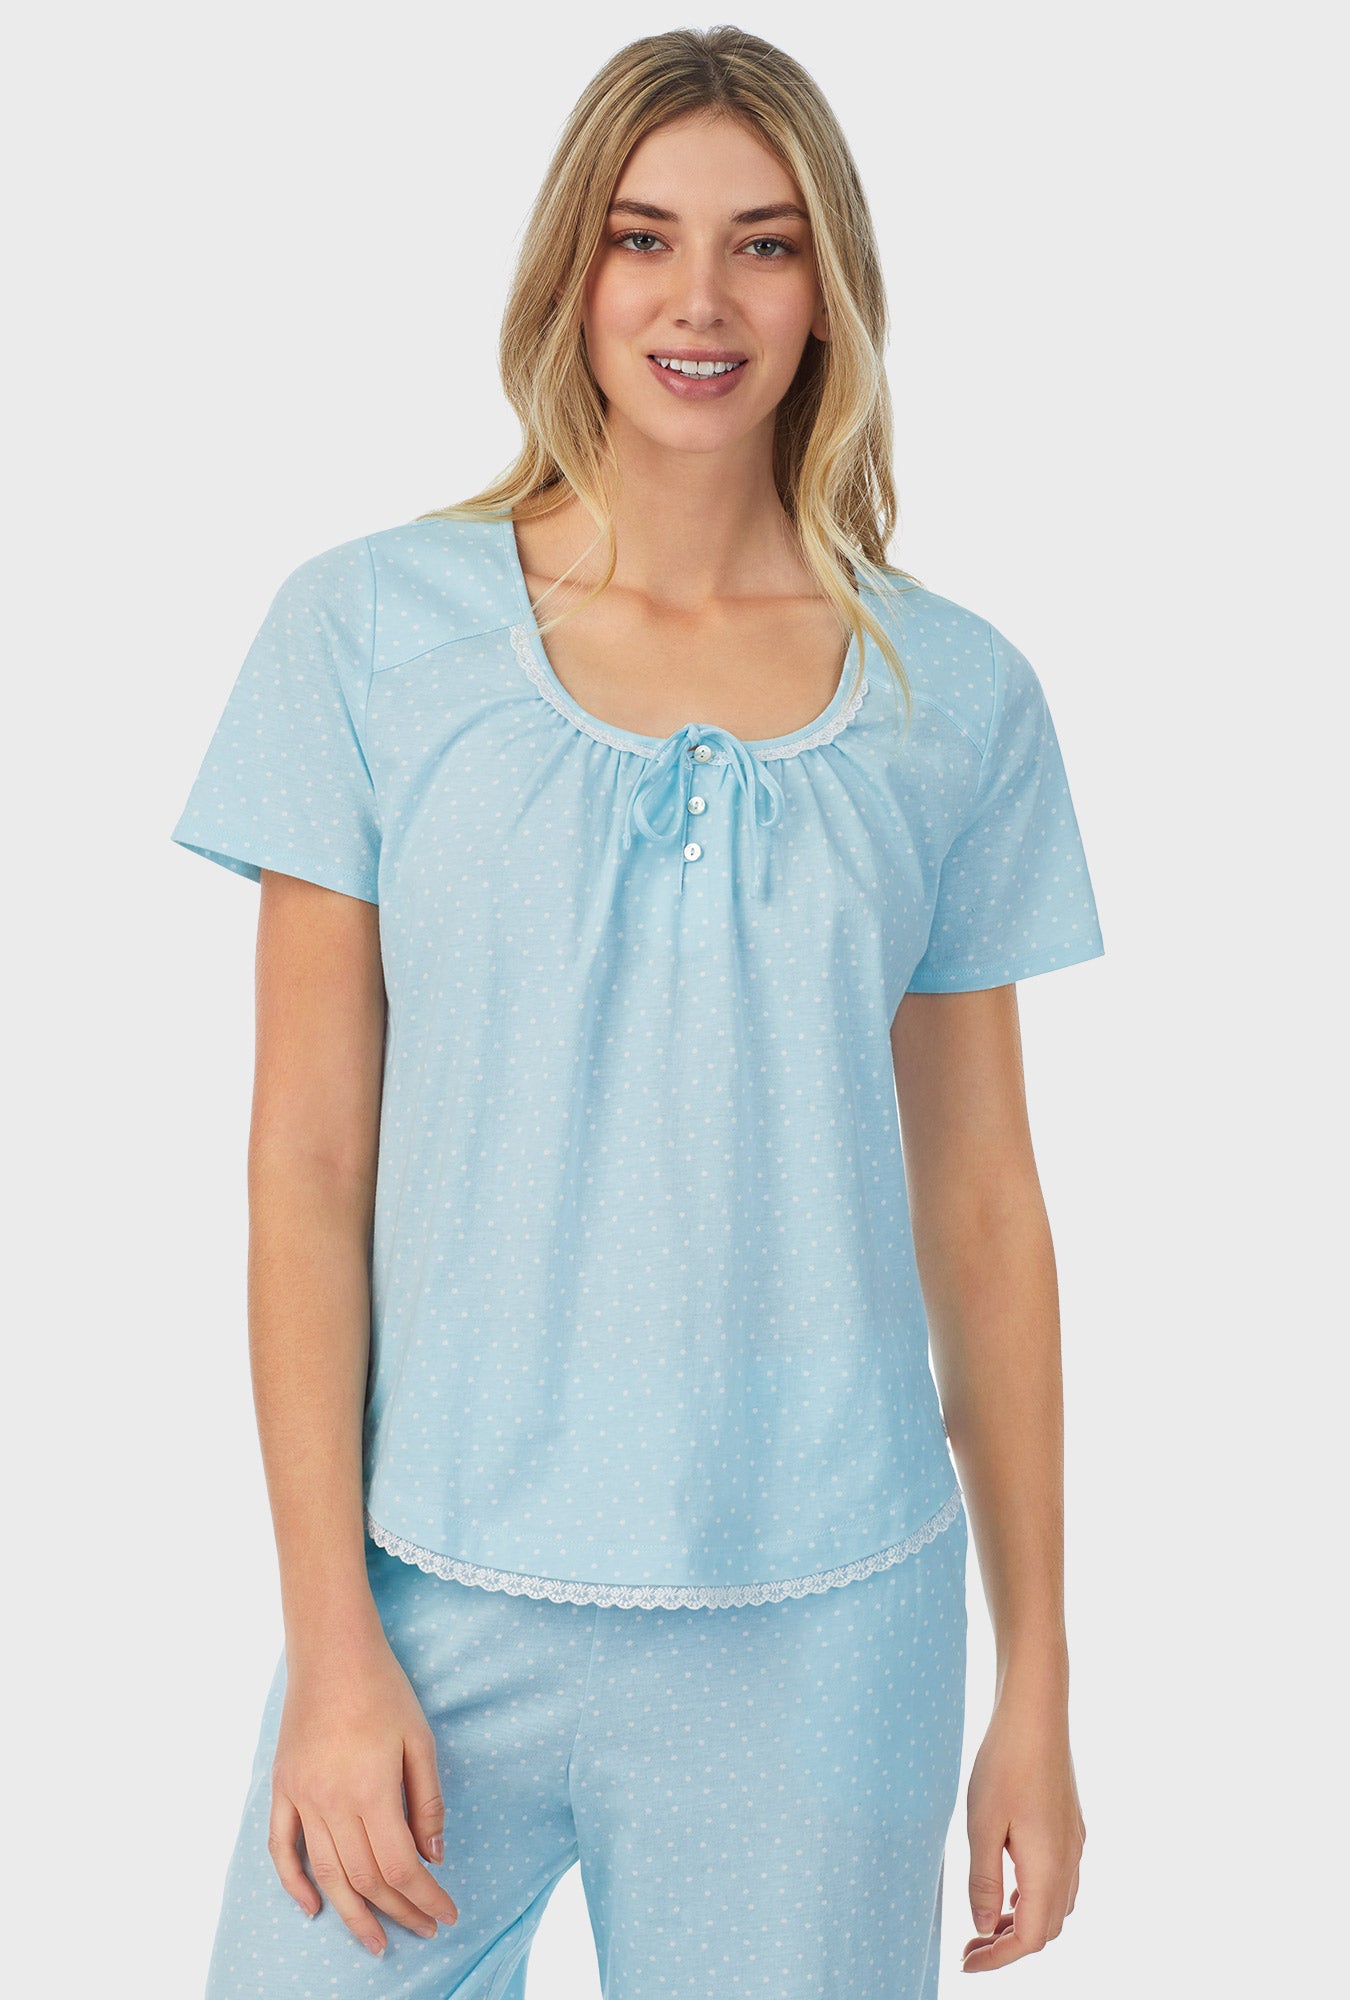 A lady wearing blue short sleeve capri pajama set with aqua dots.